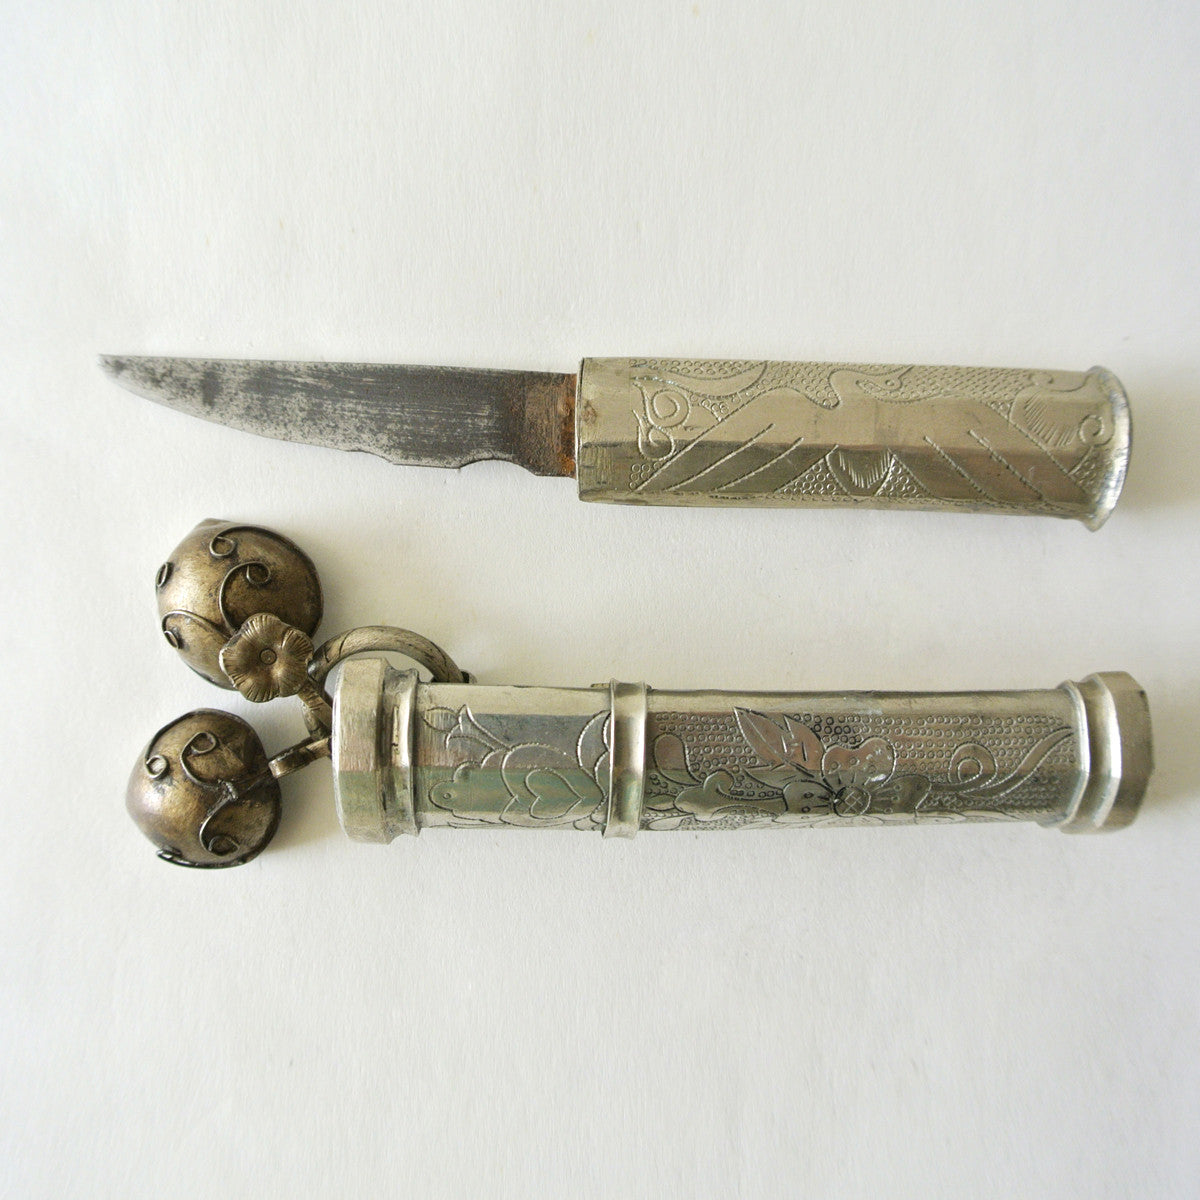 Korean knife or eunjangdo